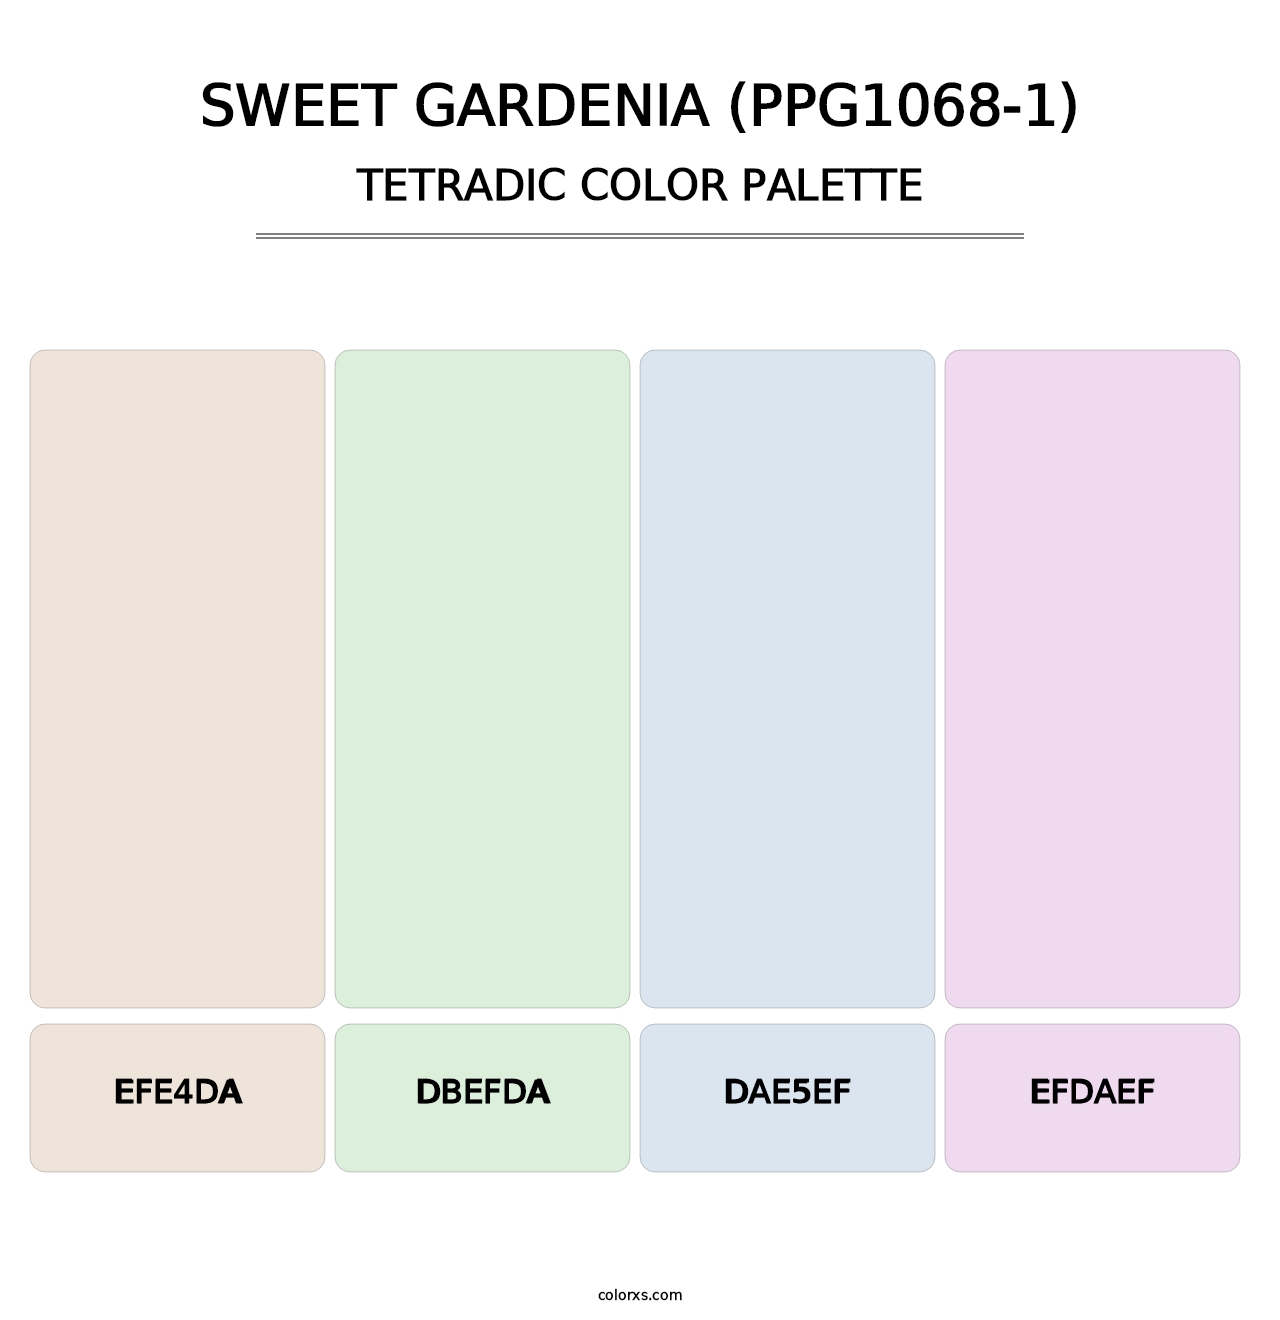 Sweet Gardenia (PPG1068-1) - Tetradic Color Palette